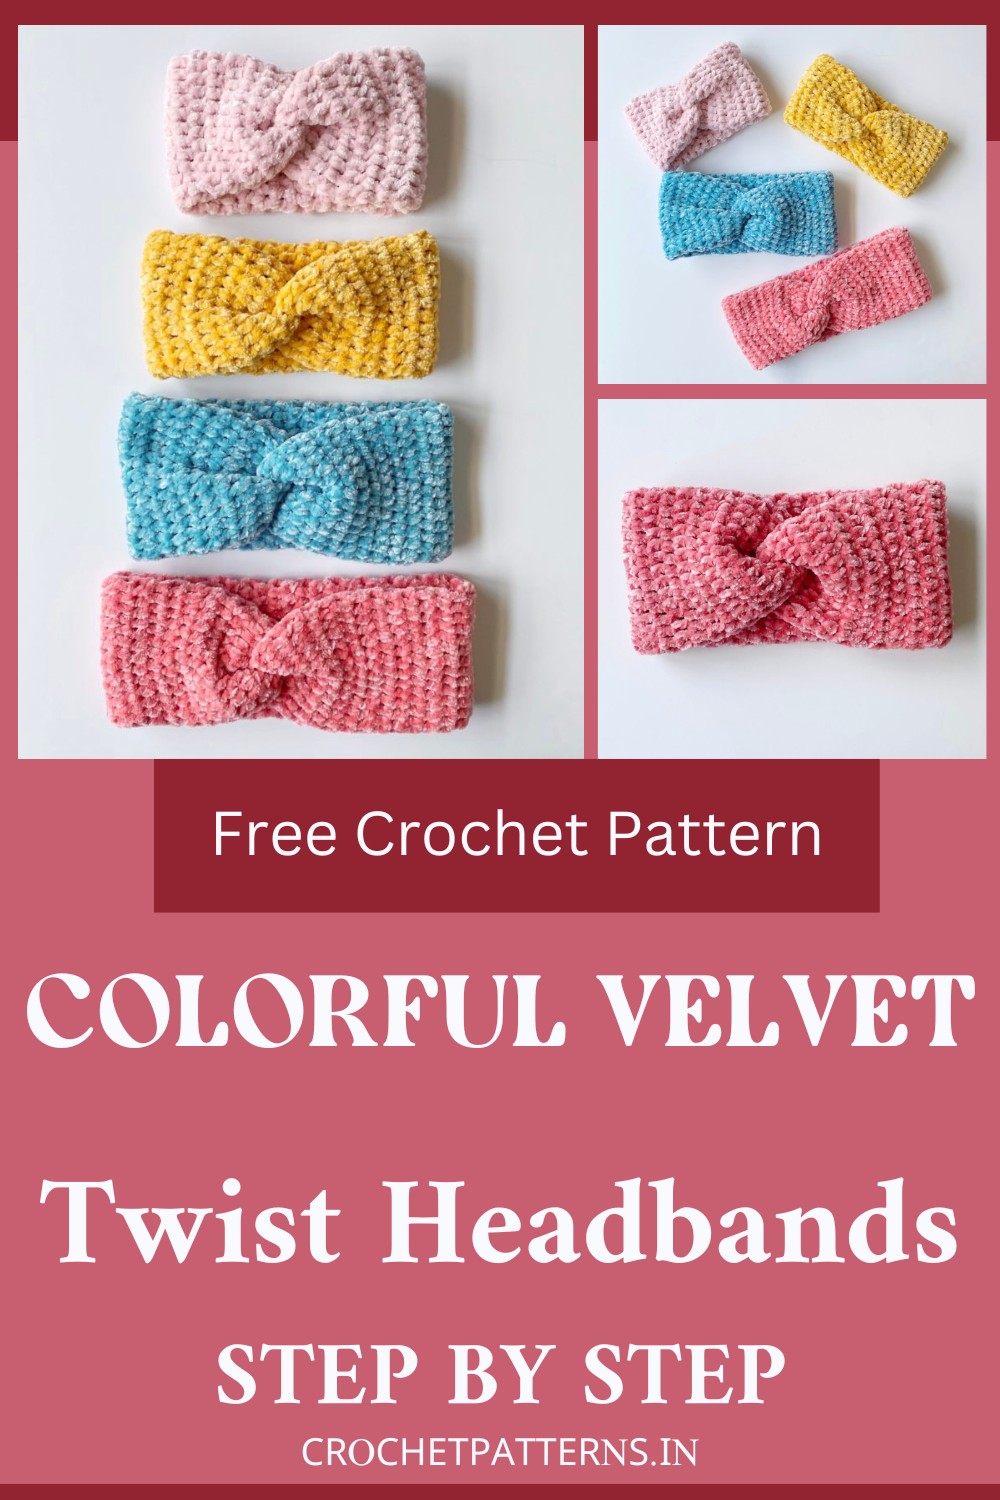 Crochet Colorful Velvet Twist Headbands